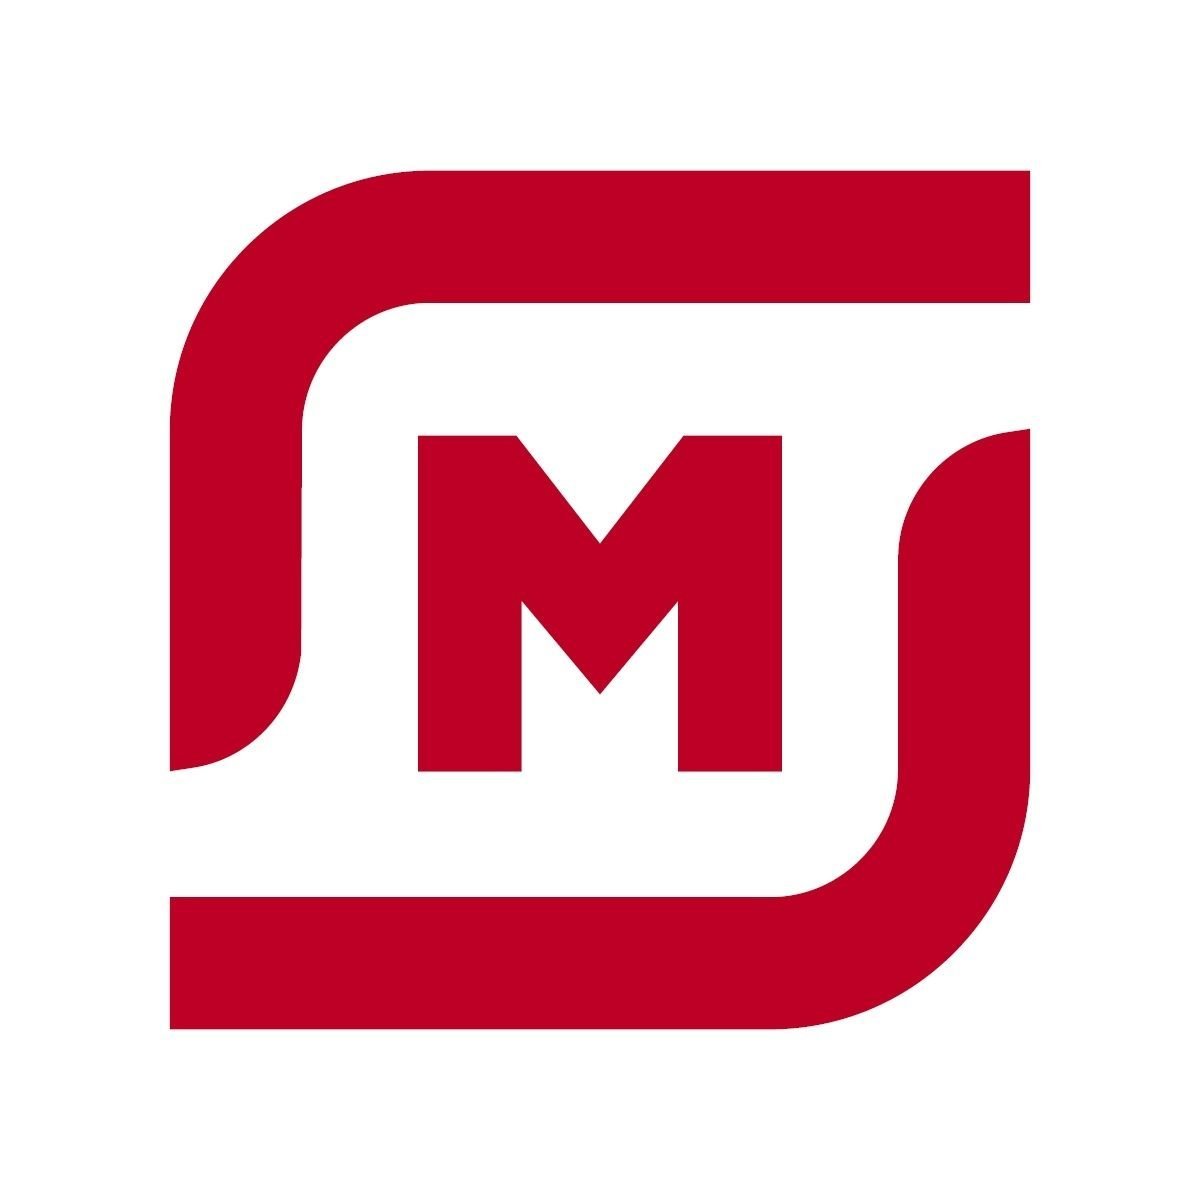 Логотип купить спб. Магнит логотип 2021. Магний логотип. Магнит магазин логотип. Магнит логотип прозрачный.